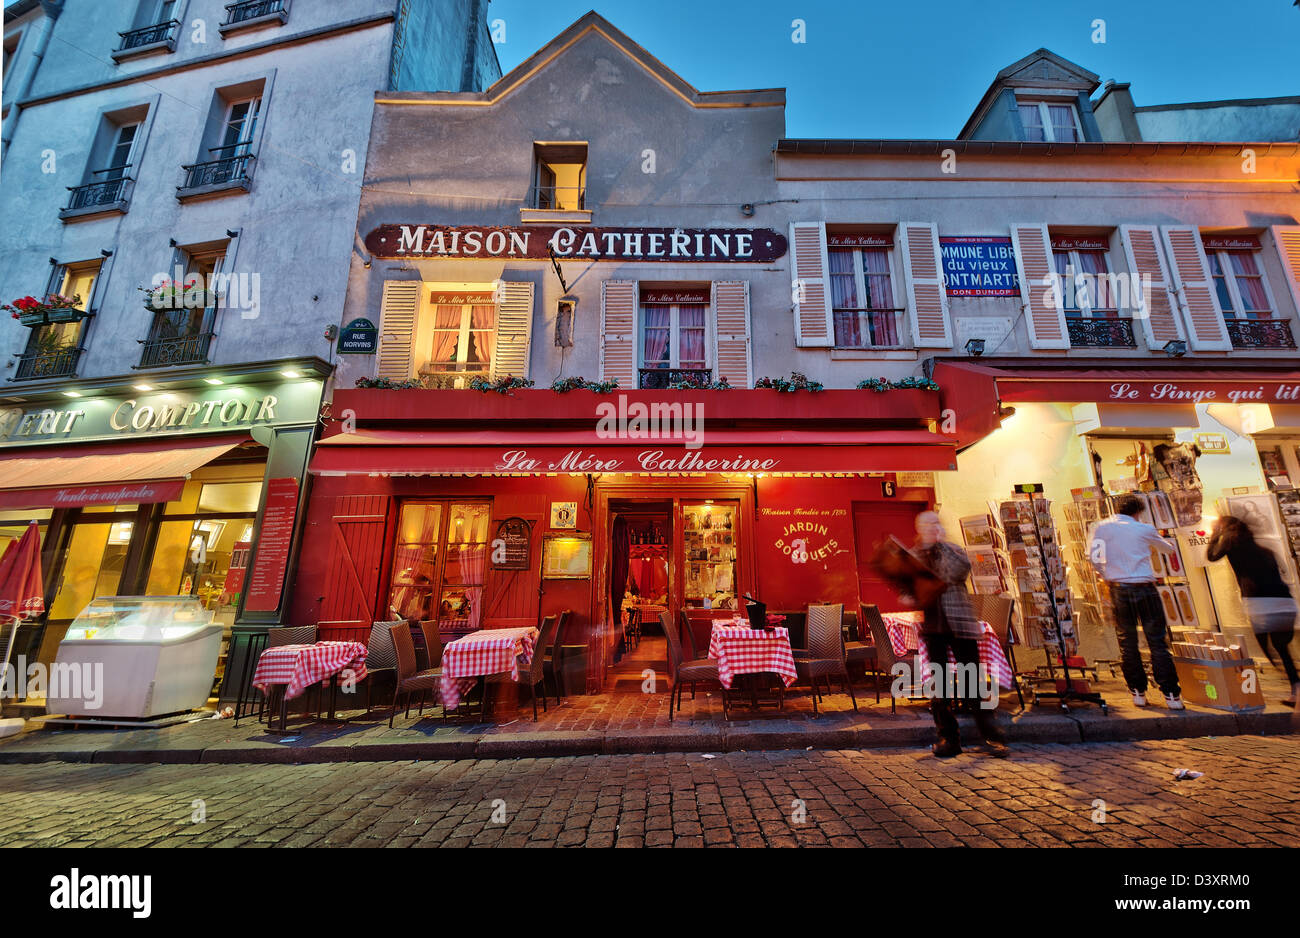 Maison Catherine and restaurant “La Mère Catherine” near Place du ...